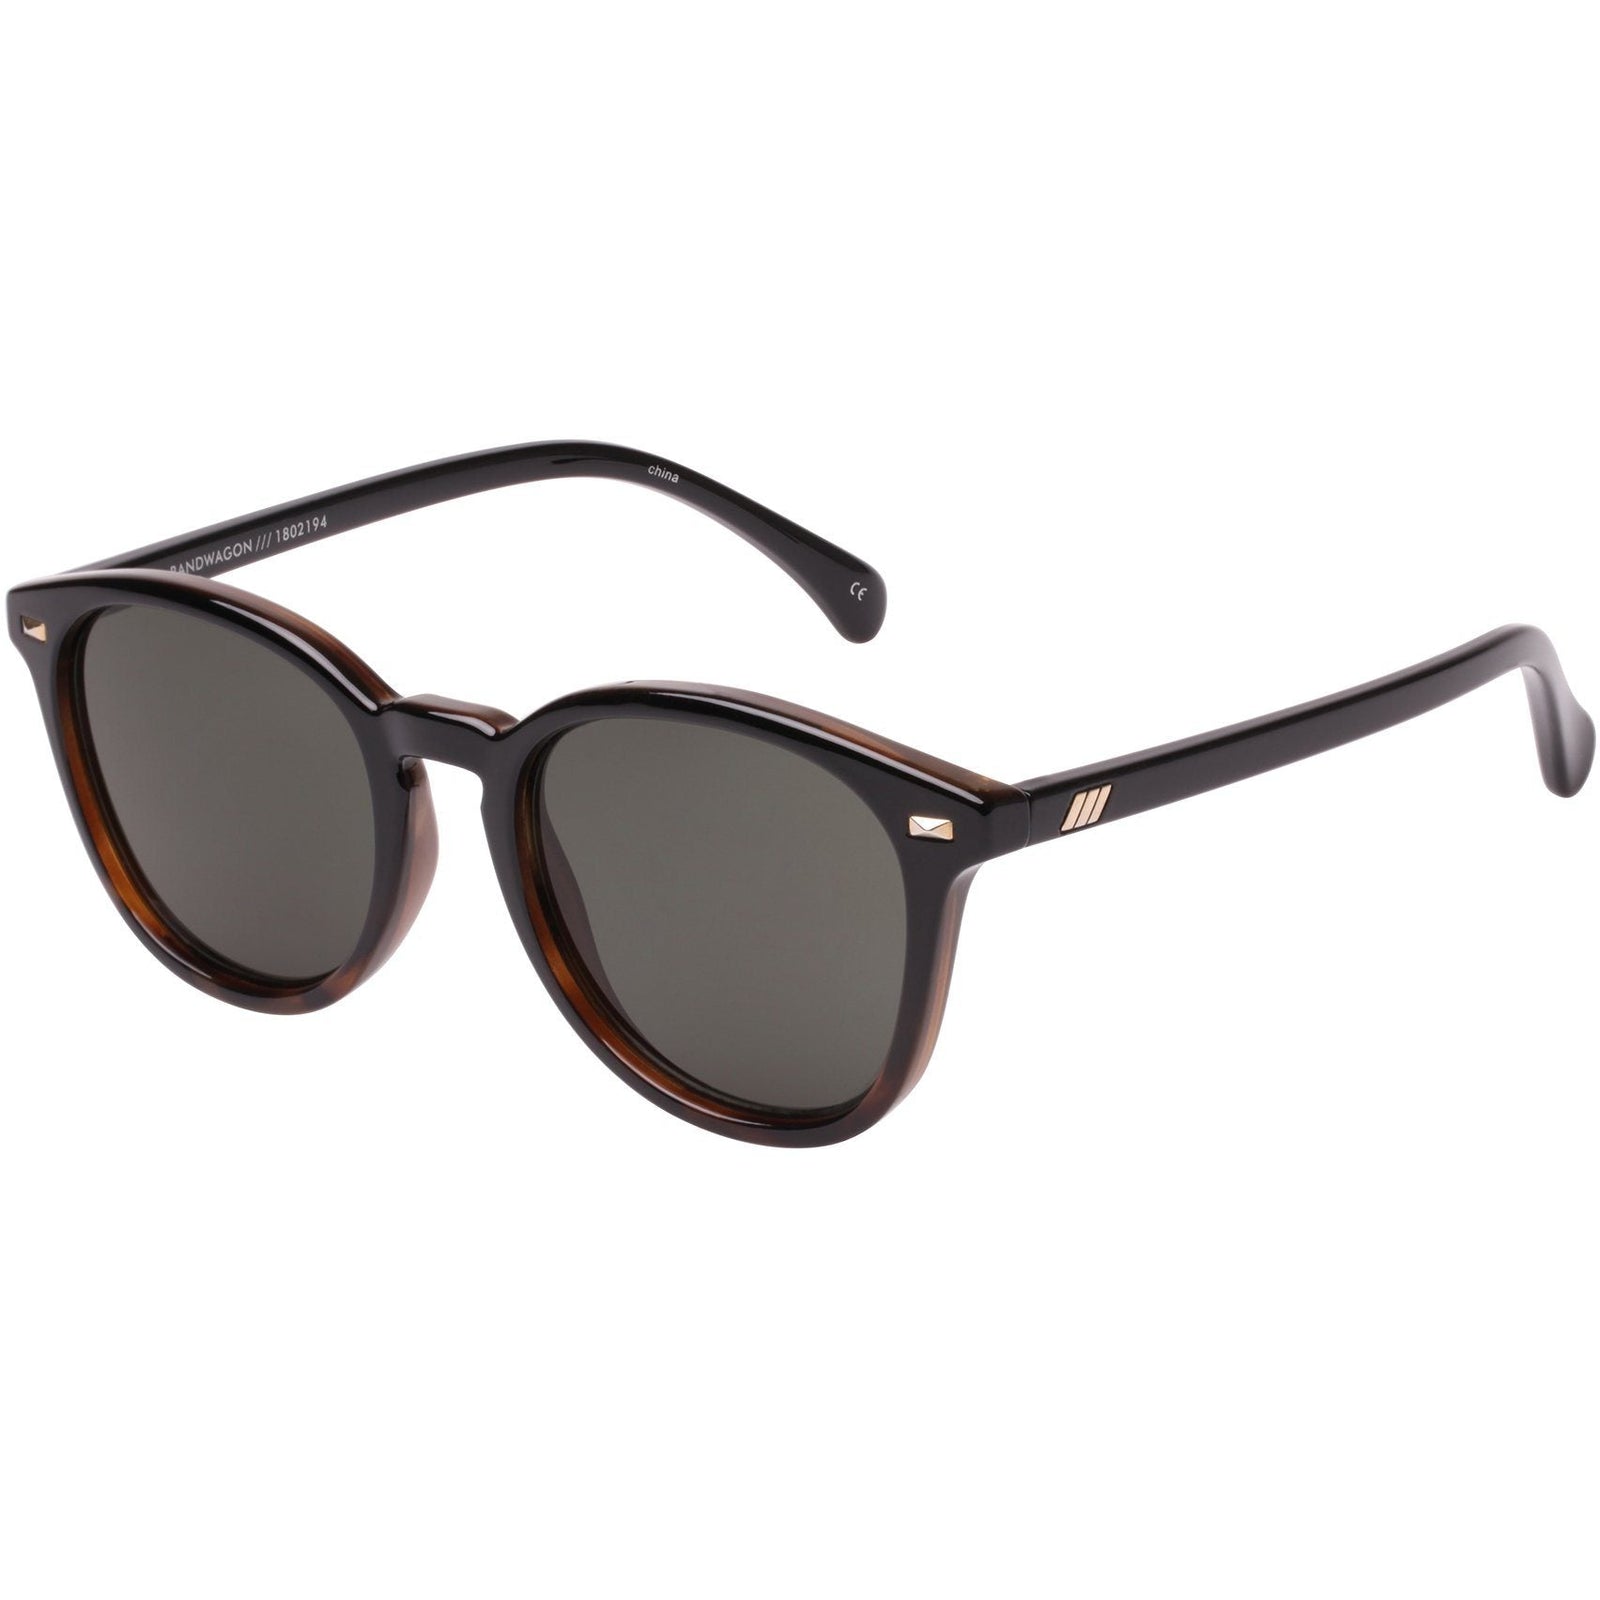 Bandwagon Black Tort Uni-Sex Round Sunglasses Specs Le 